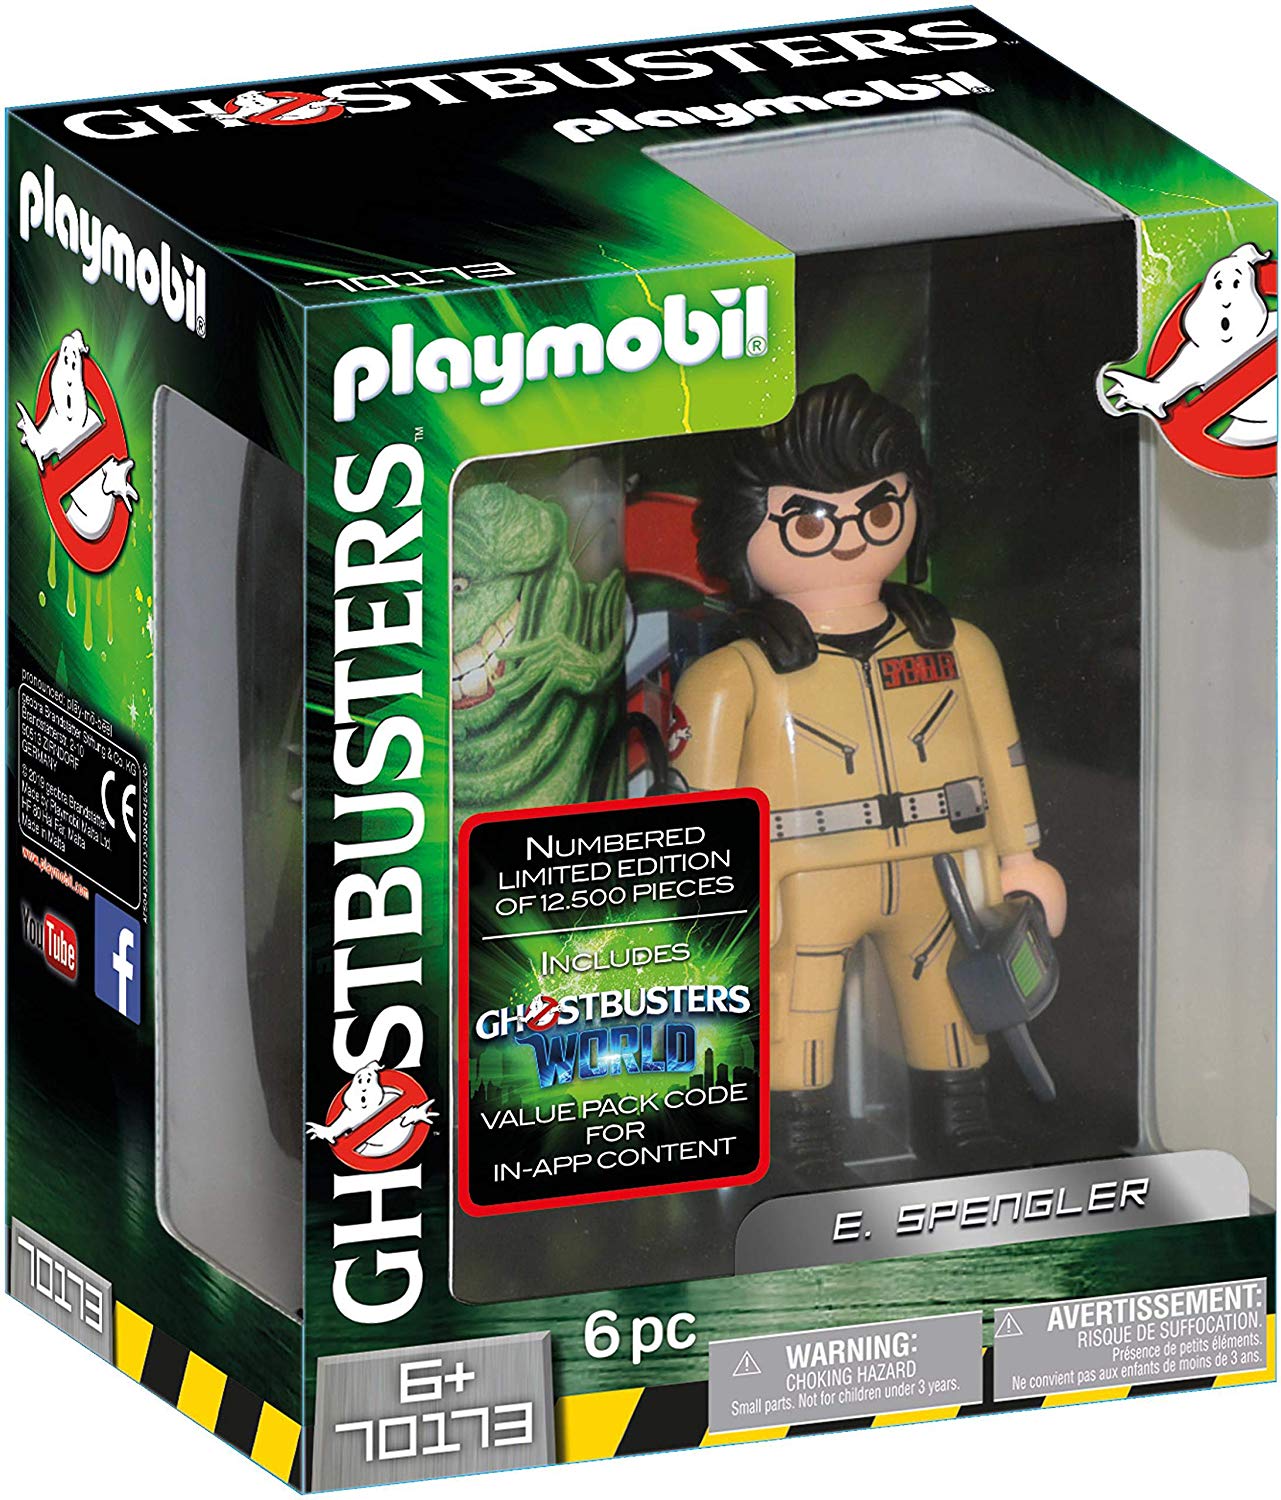 Playmobil 70173 Ghostbusters Collectable Figurine E. Spengler Multi-Coloure